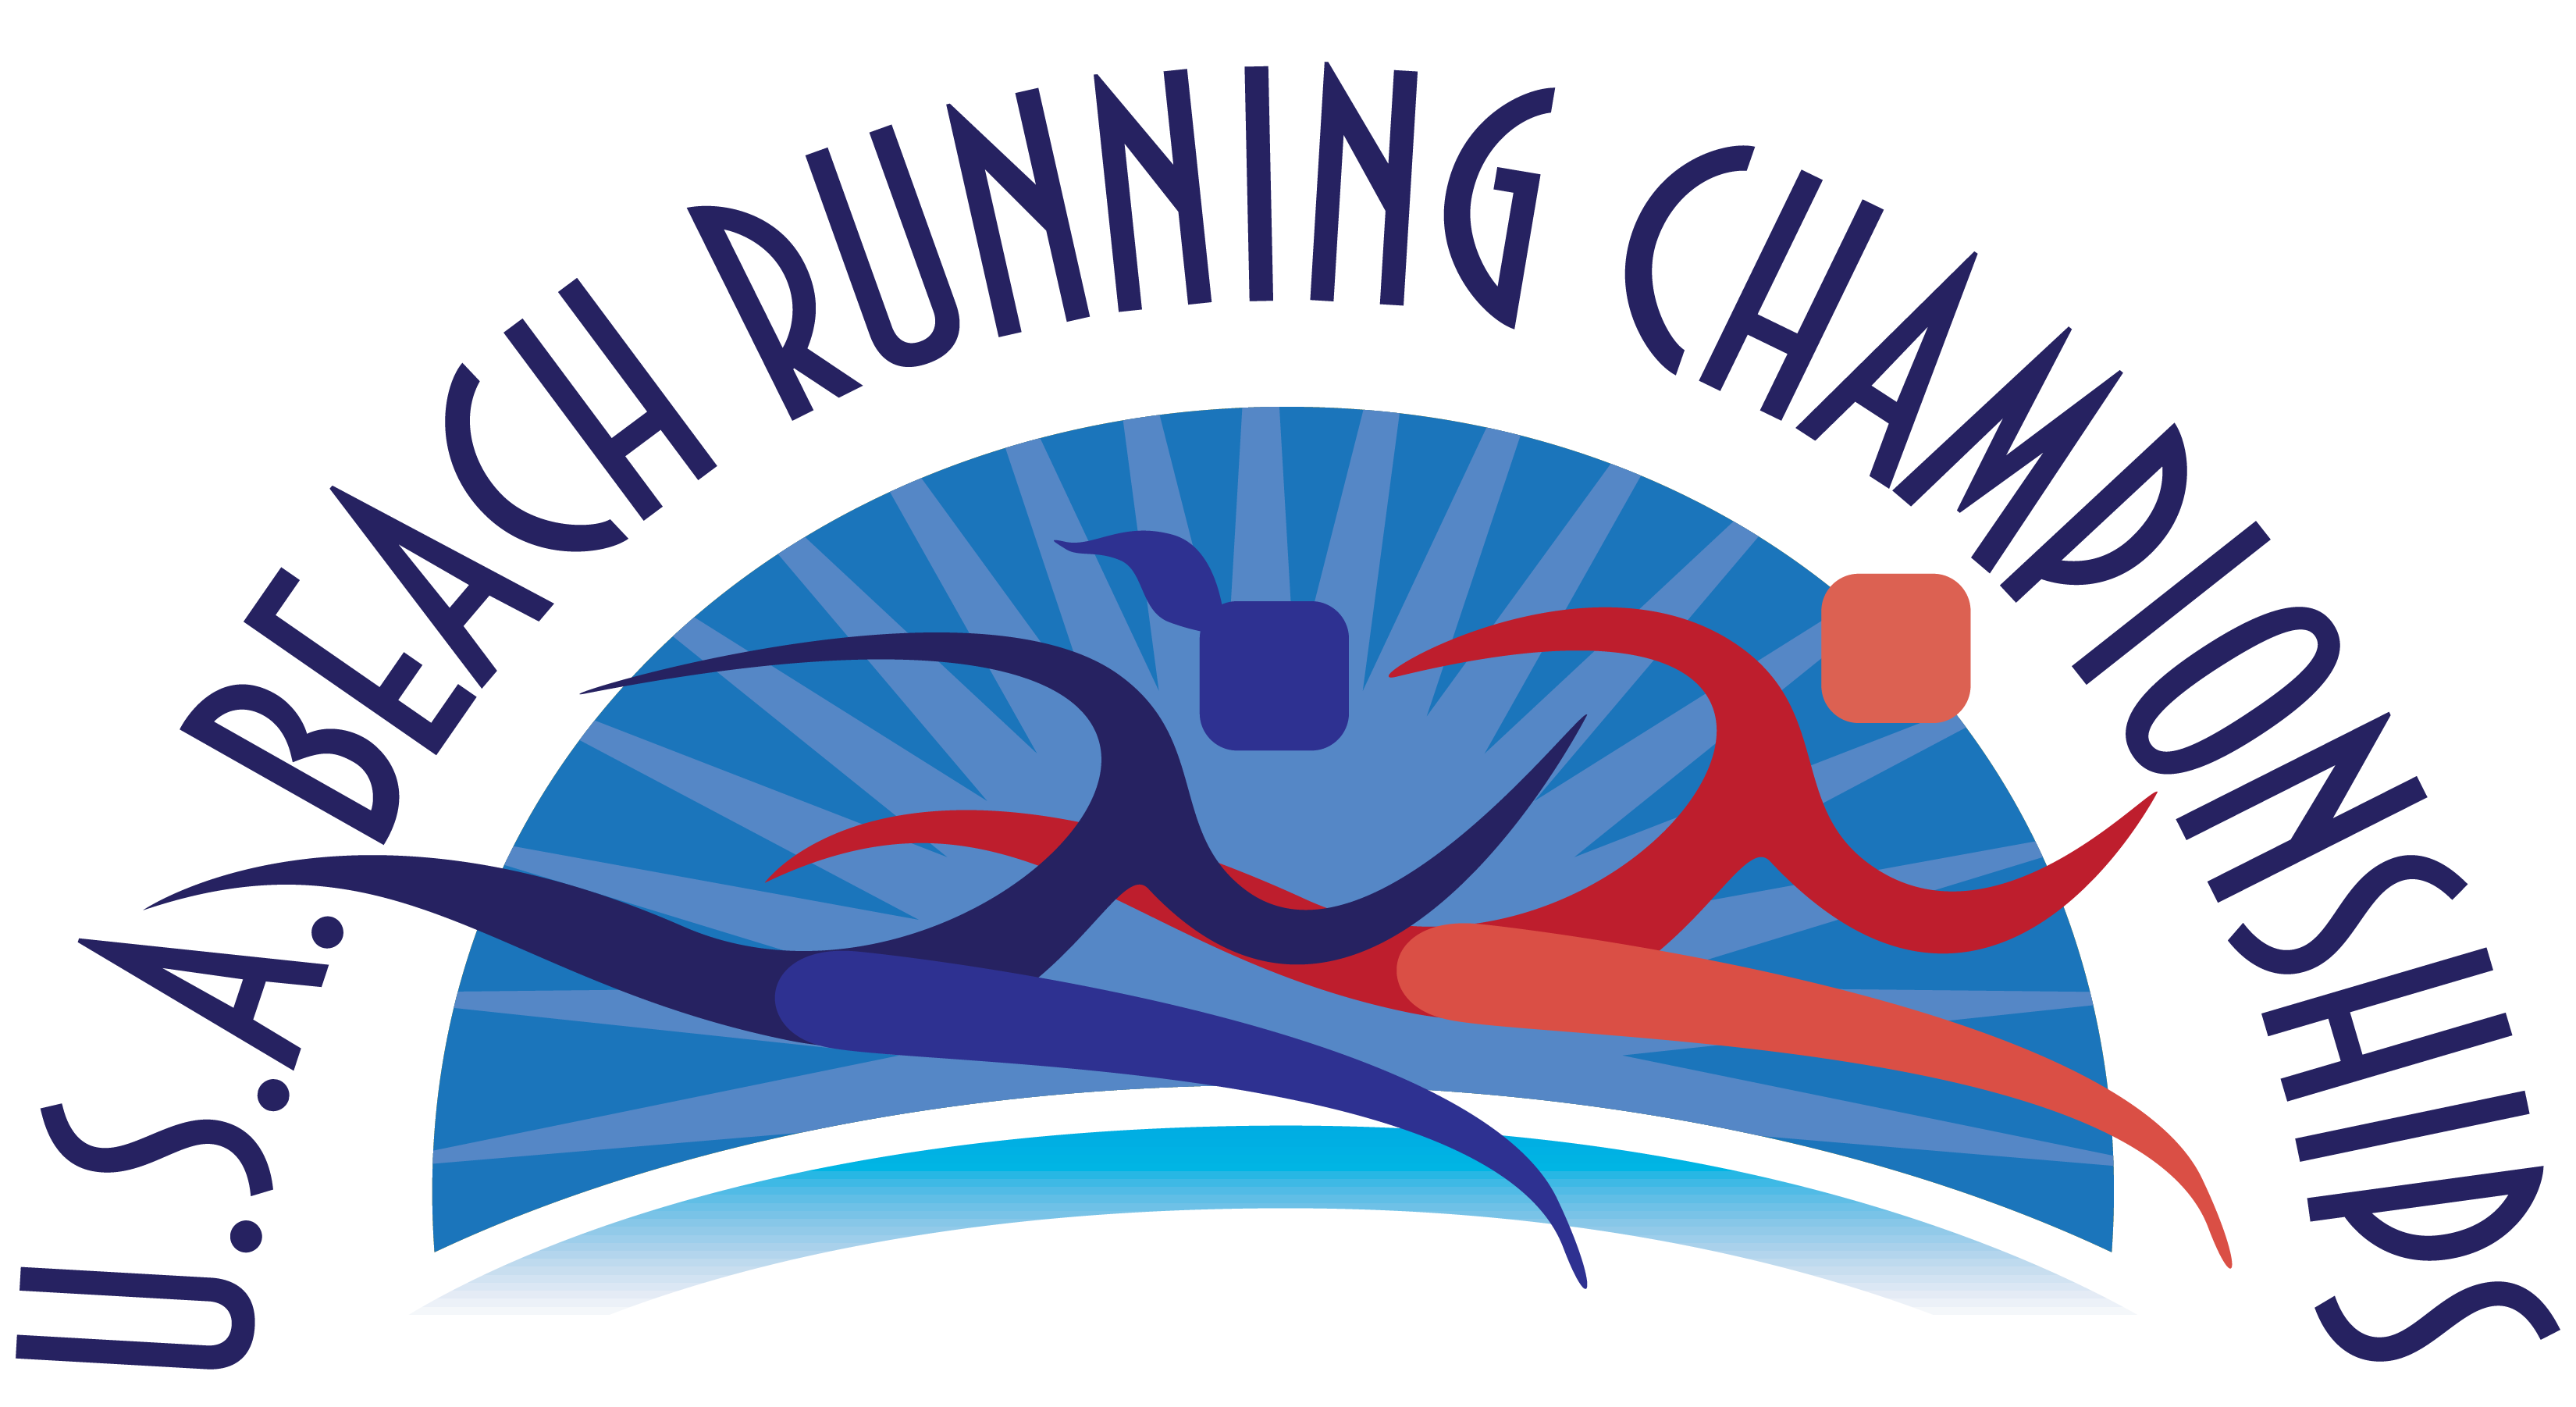 USA Beach Running Championships logo on RaceRaves